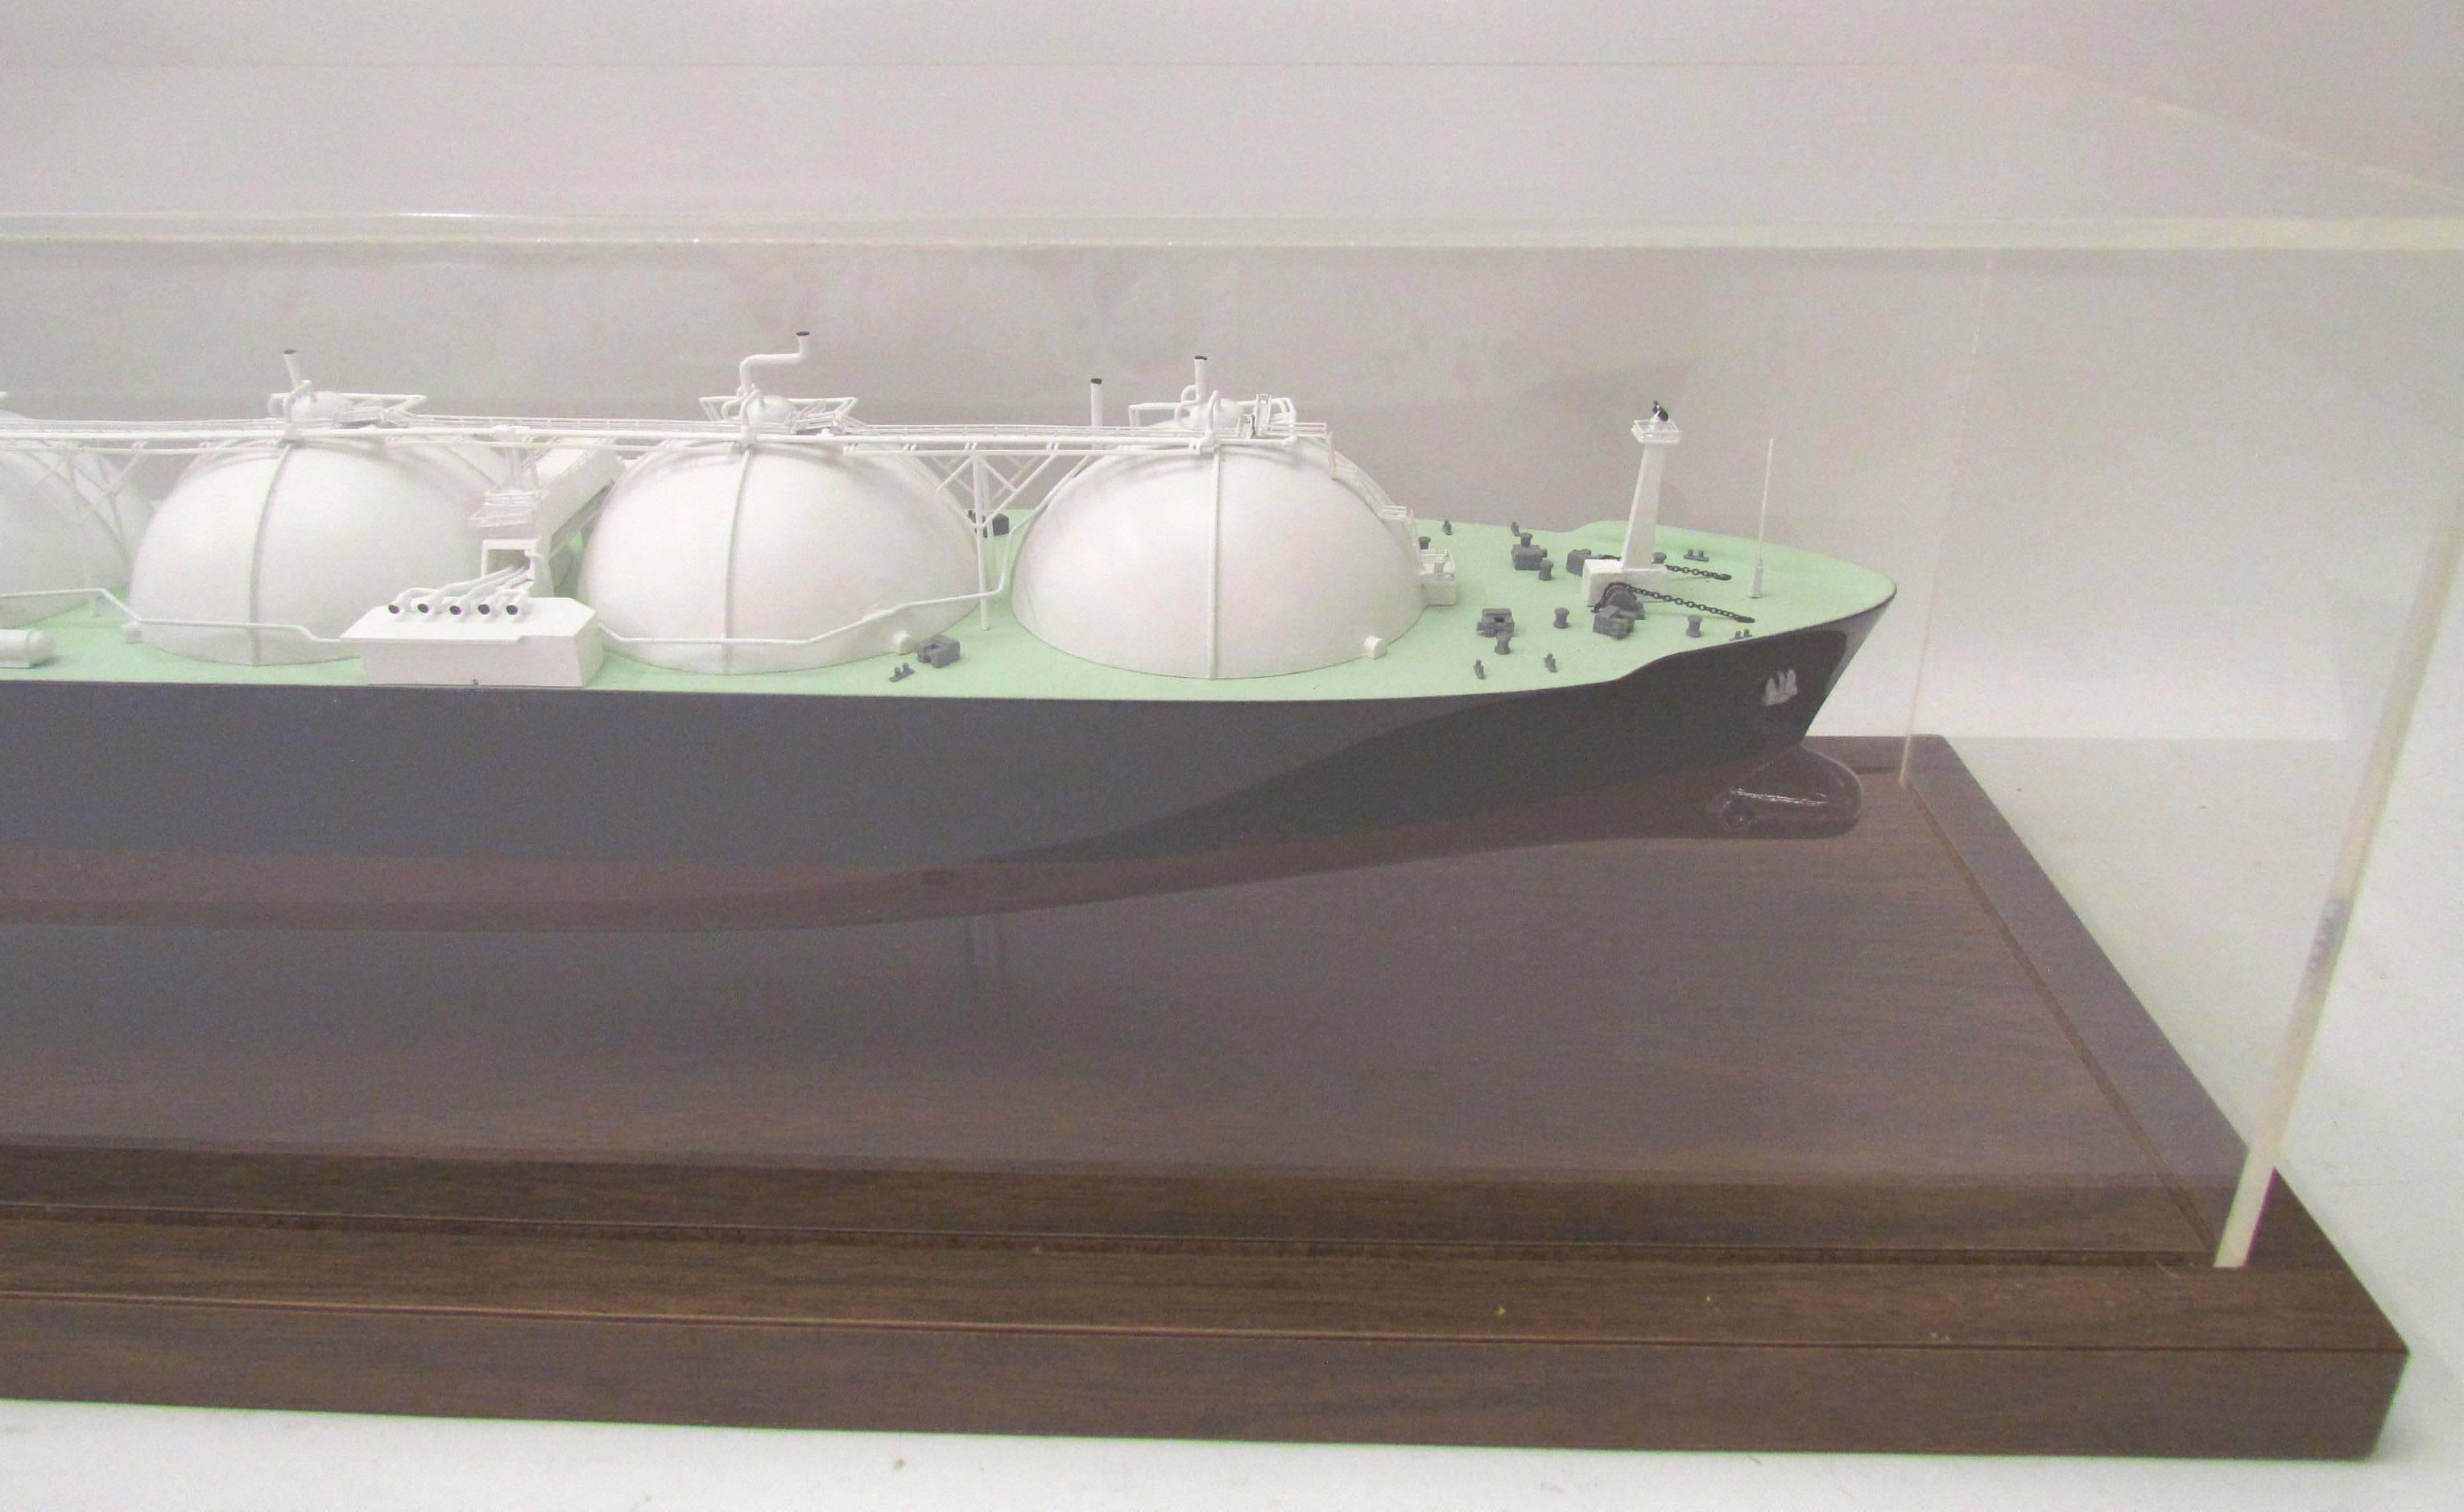 Wood Executive Ship Model of an LNG Tanker, circa 1980s